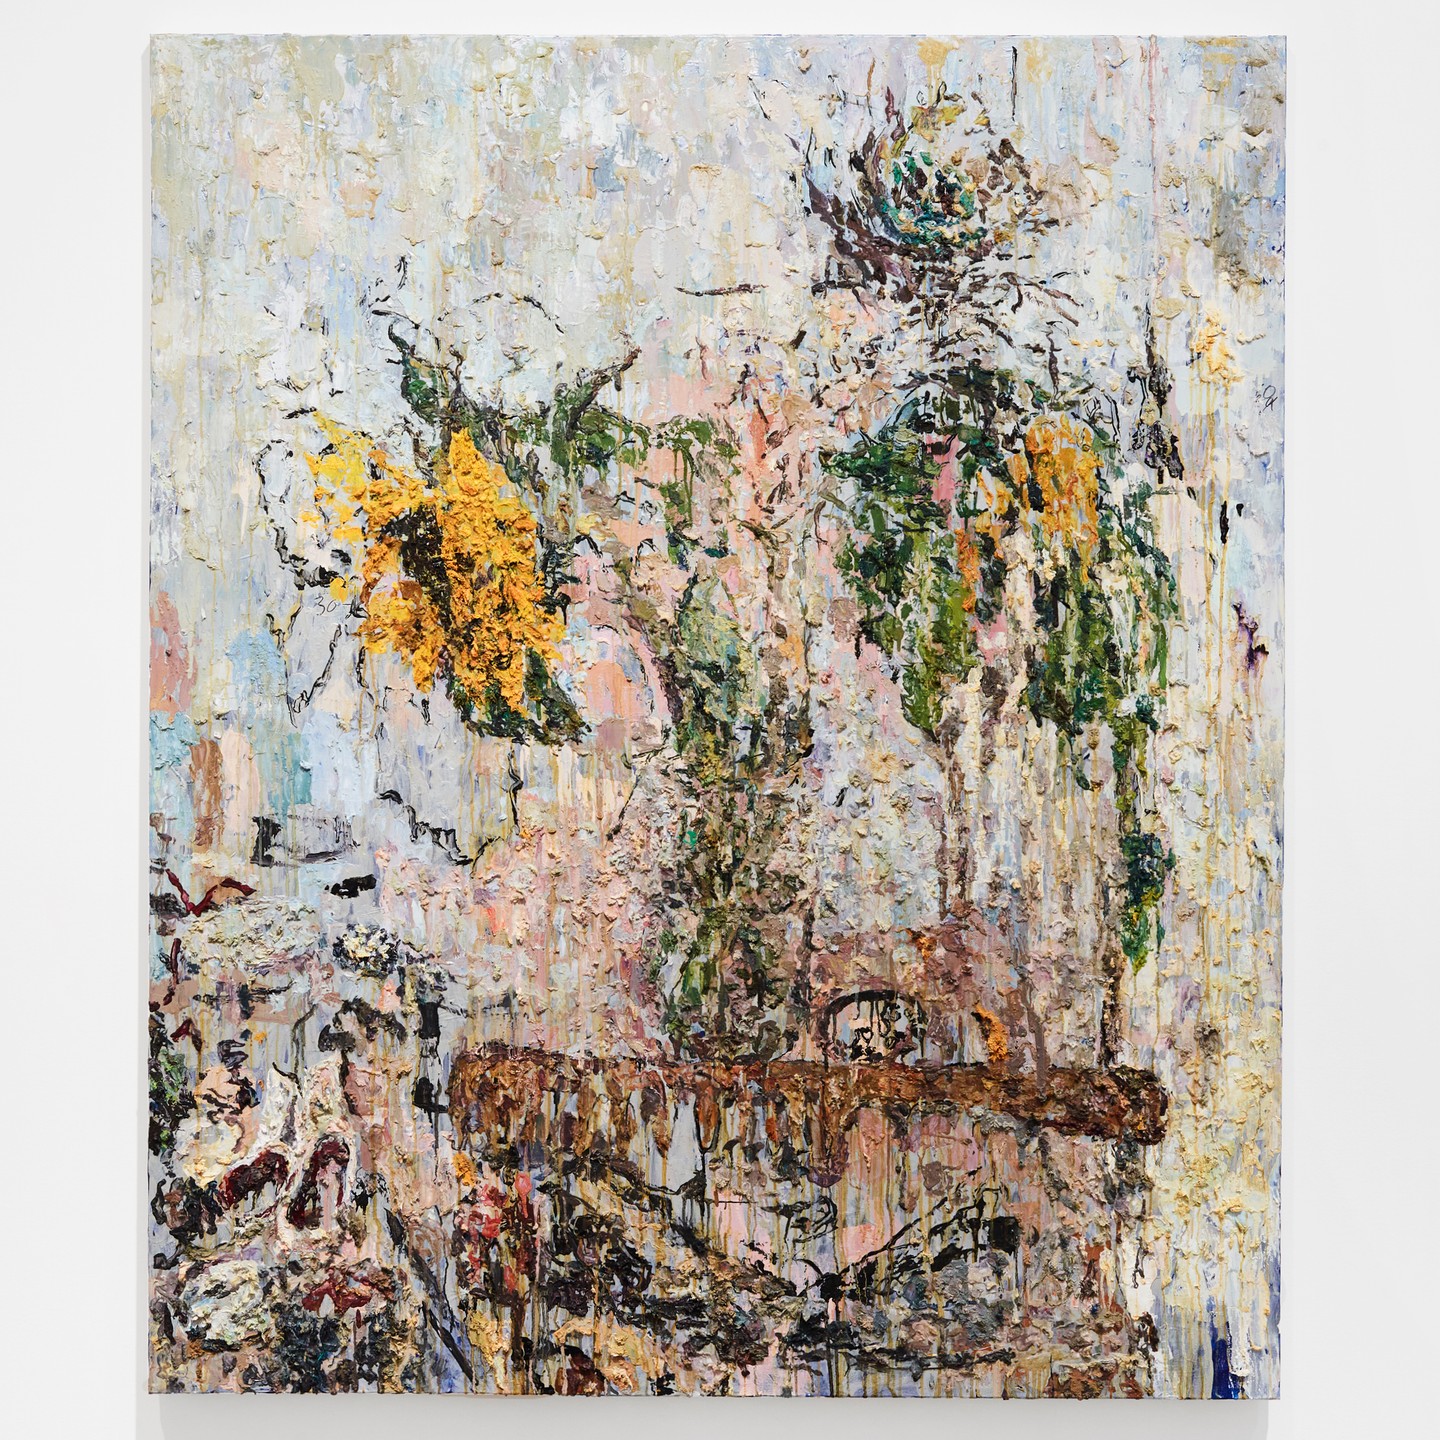 Andy Robert, Sunflowers 2016. Vue de l'exposition 